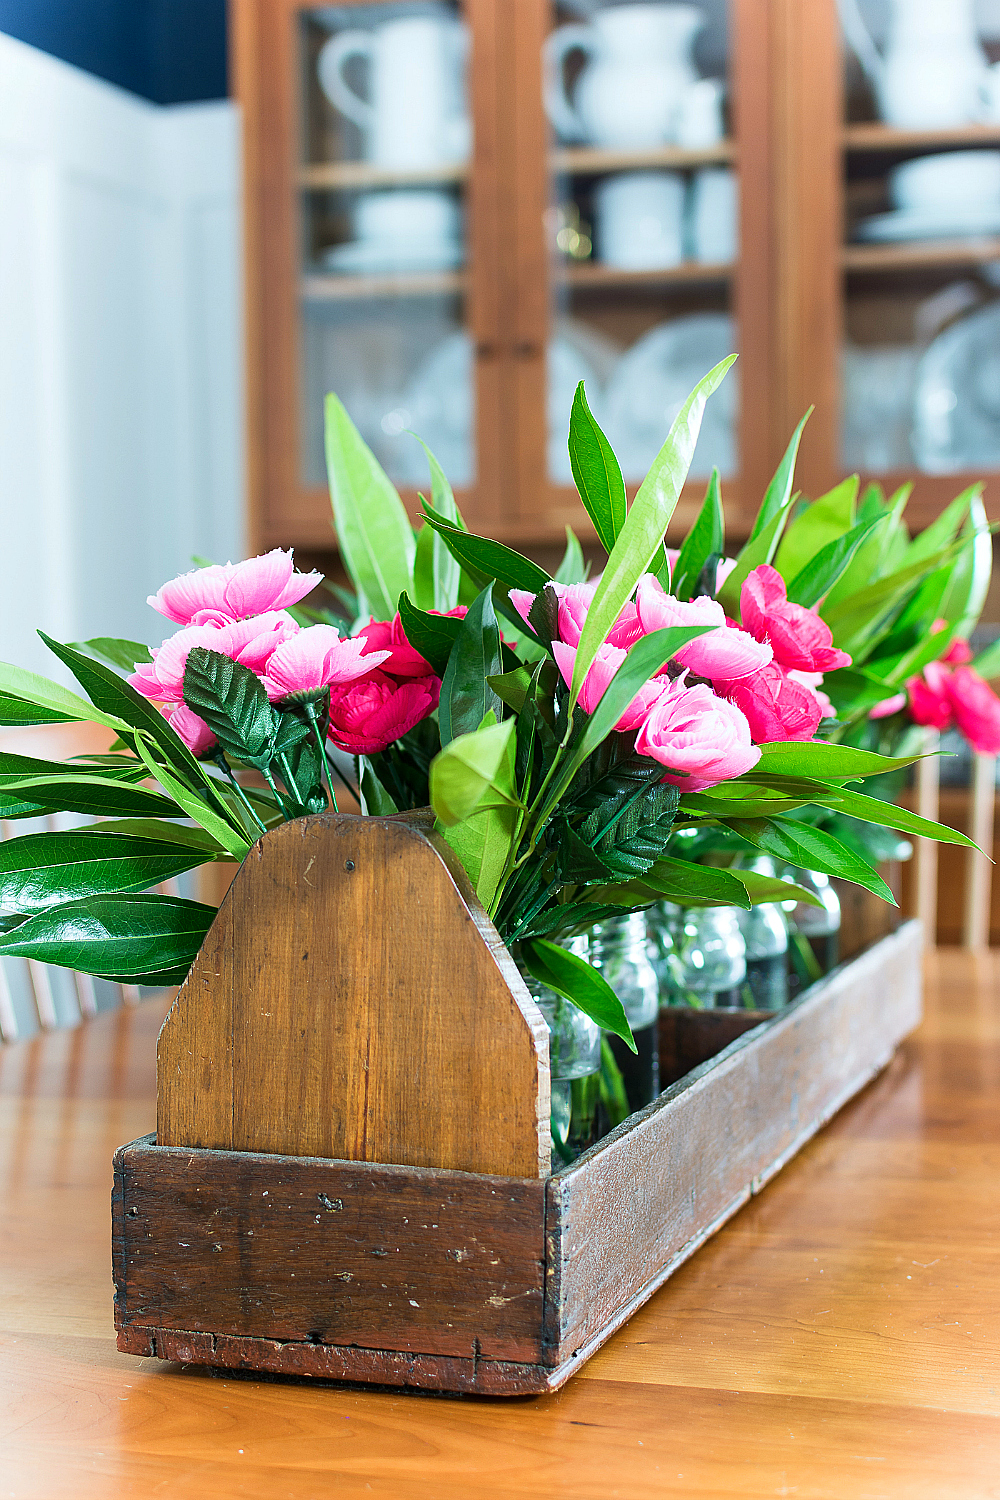 Shaker Dining Room Navy & Pink for Spring - Spring Decorating Ideas